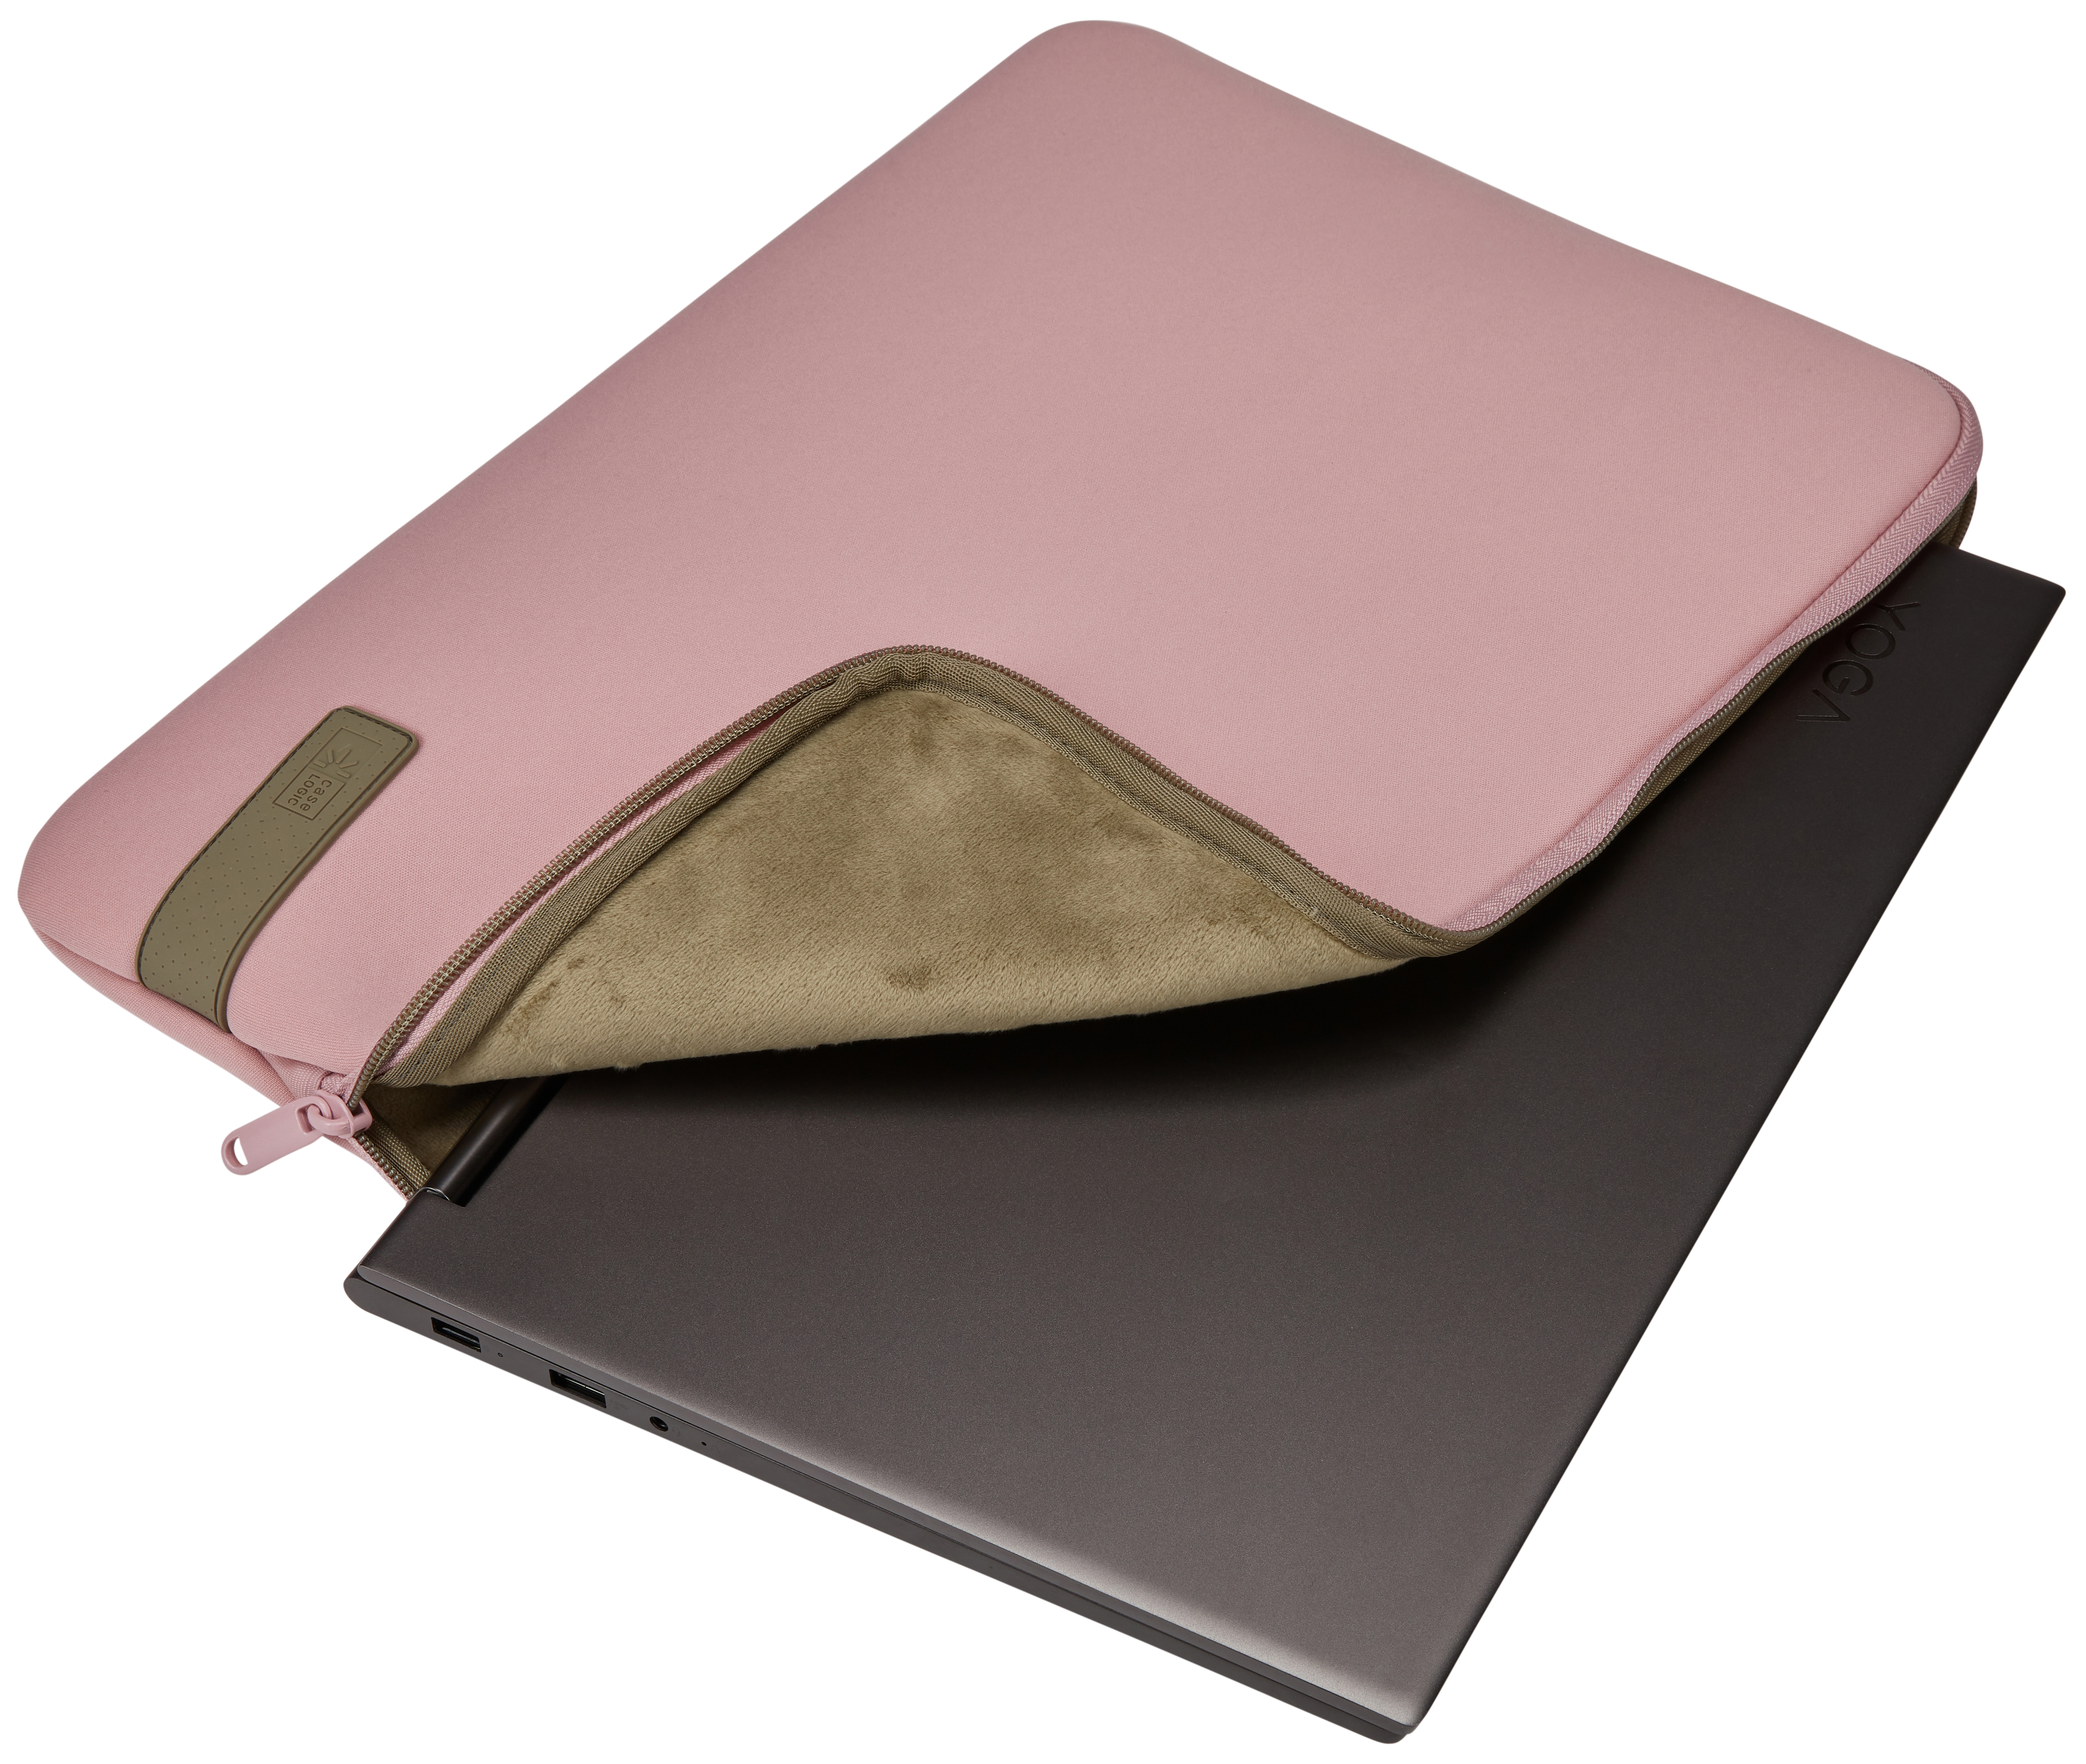 CASE Reflect Sleeve Universal Pink/Mermaid Notebook Zephyr Polyester, Sleeve LOGIC für